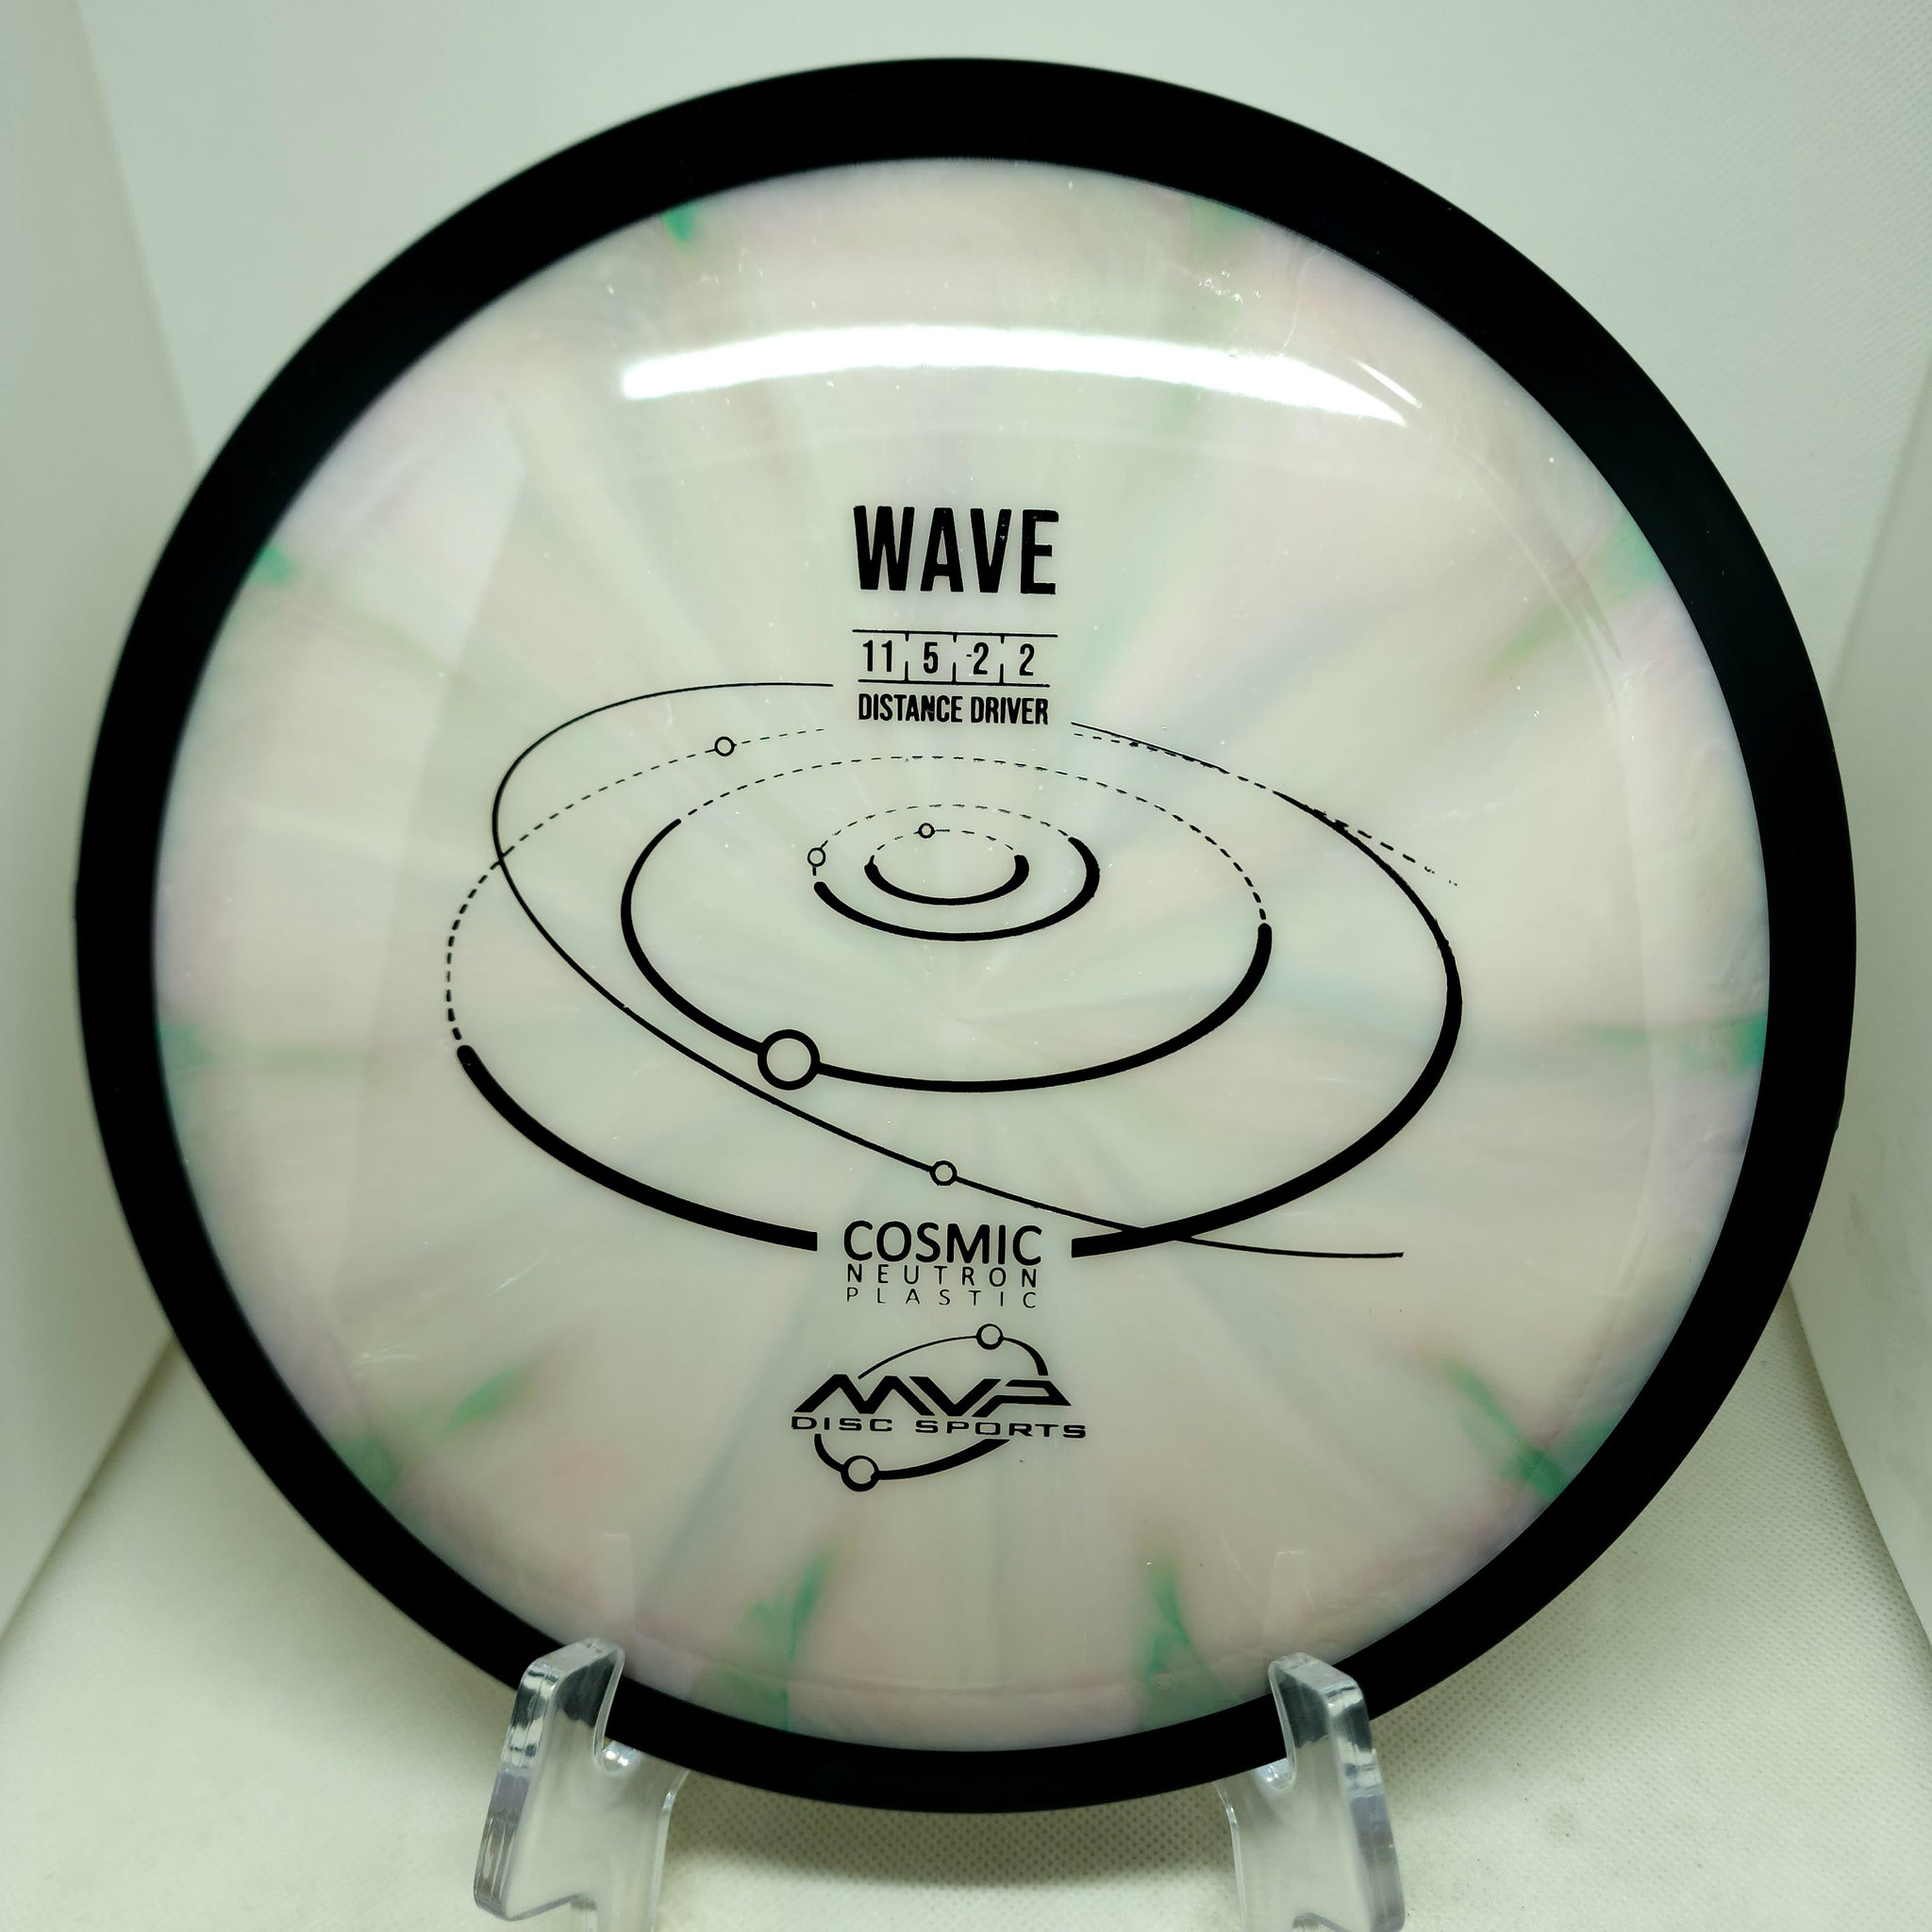 Wave (Cosmic Neutron)